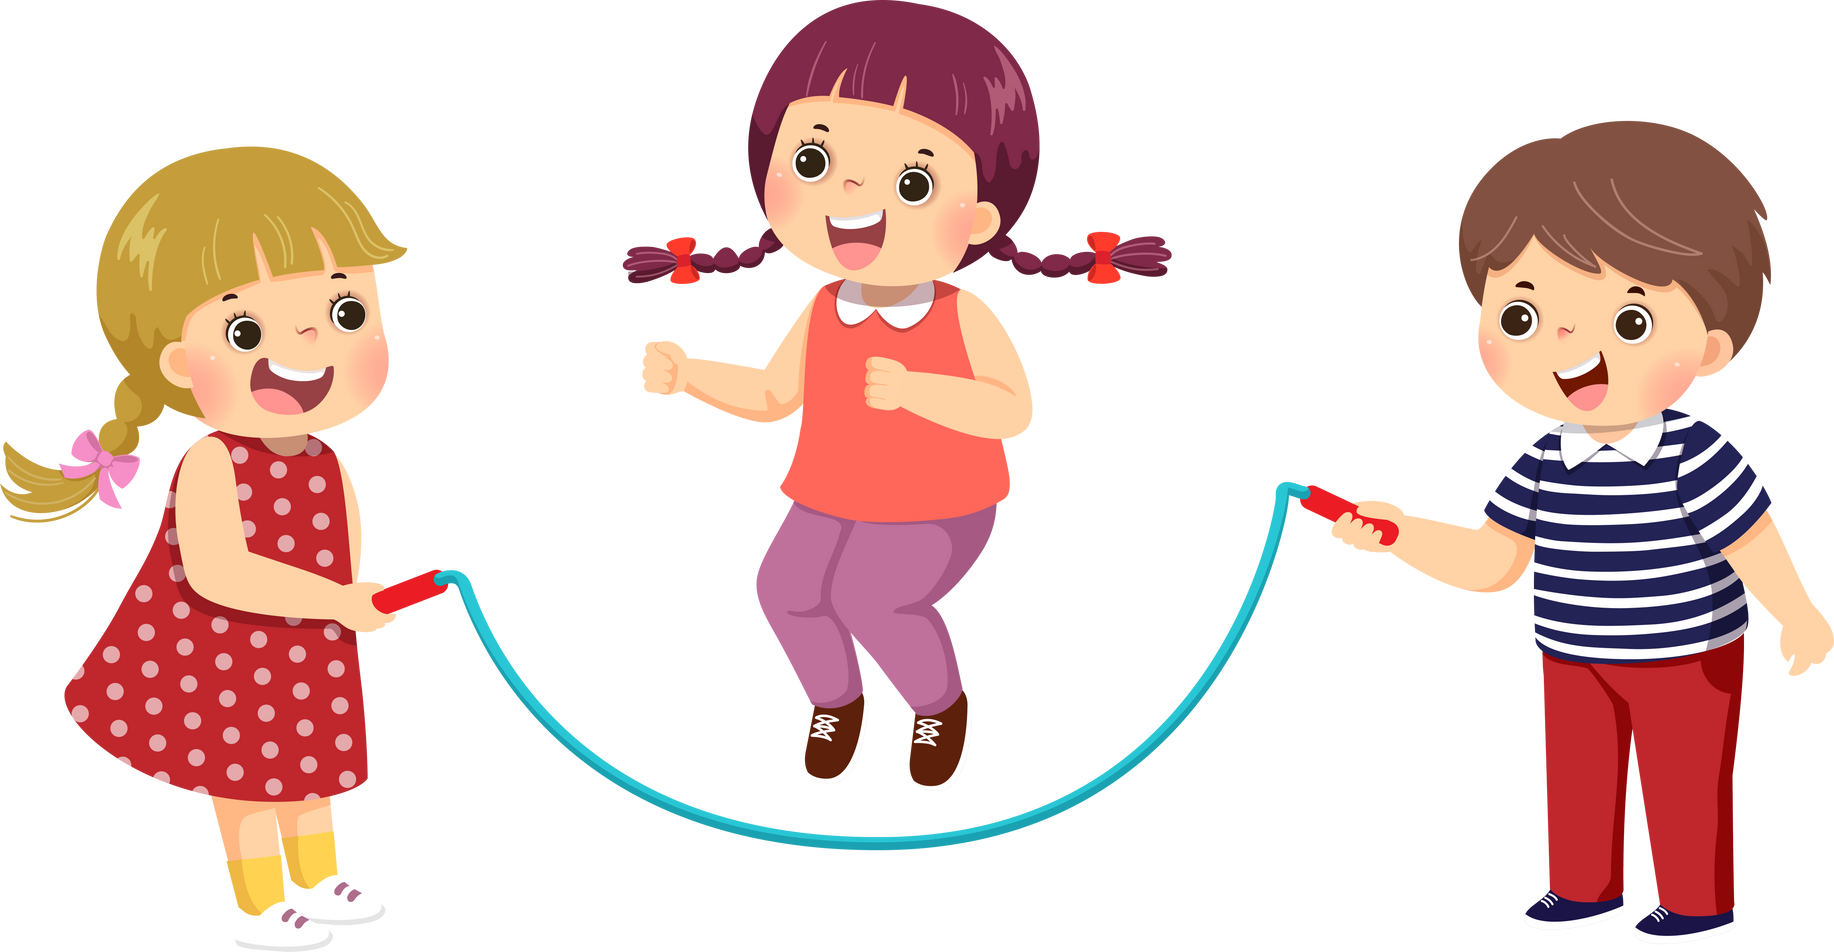 Cartoon kids jumping rope